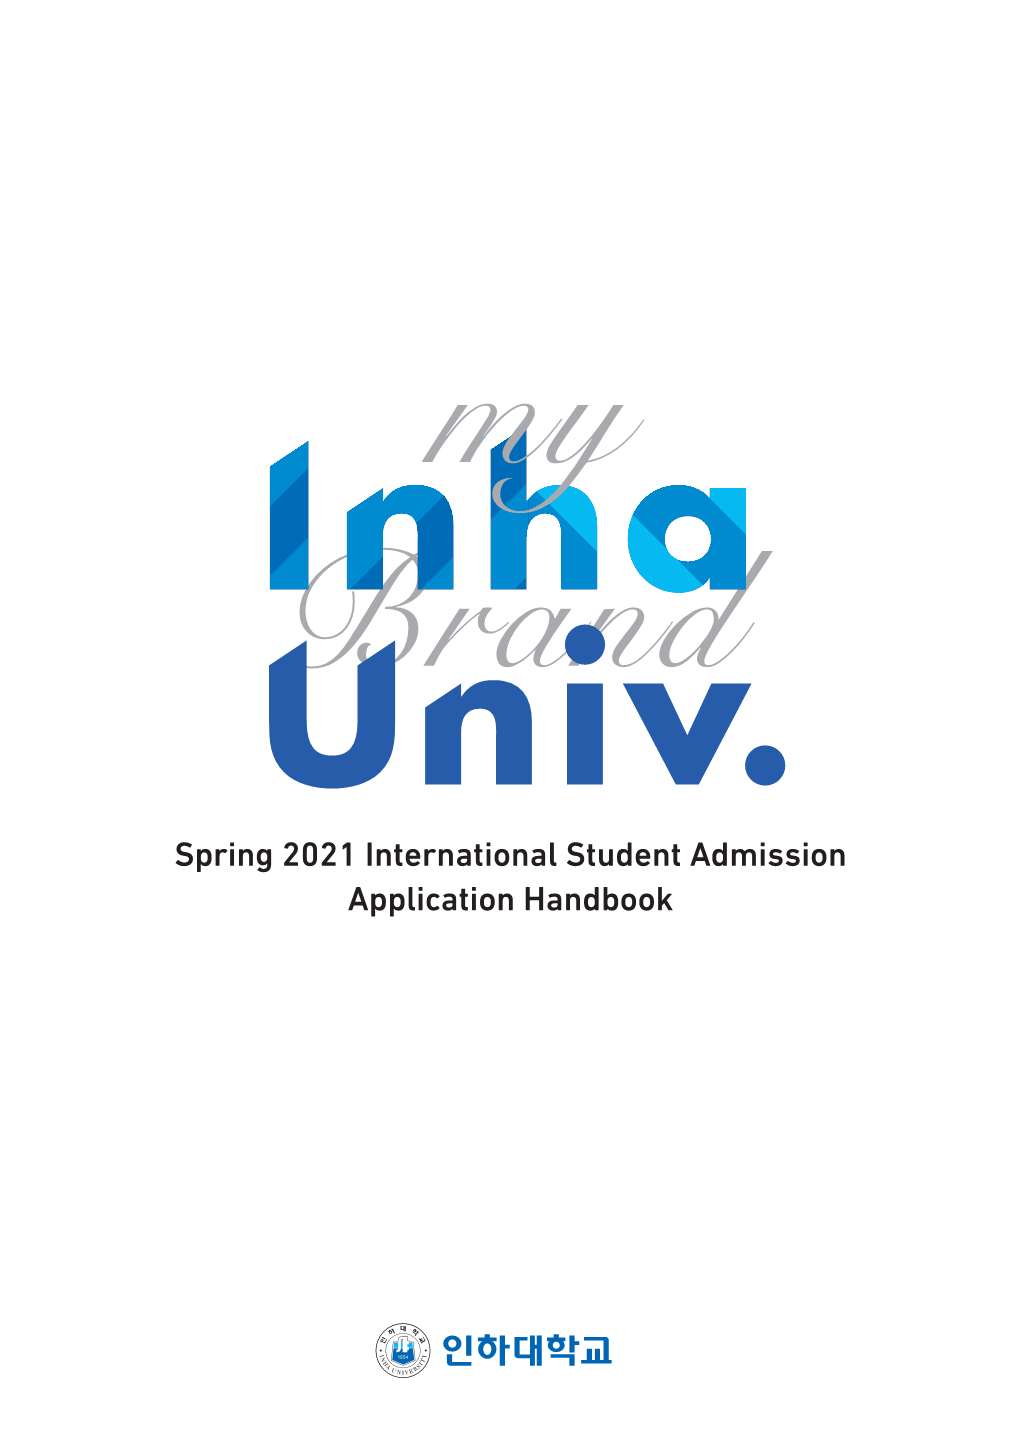 Spring 2021 International Student Admission Application Handbook